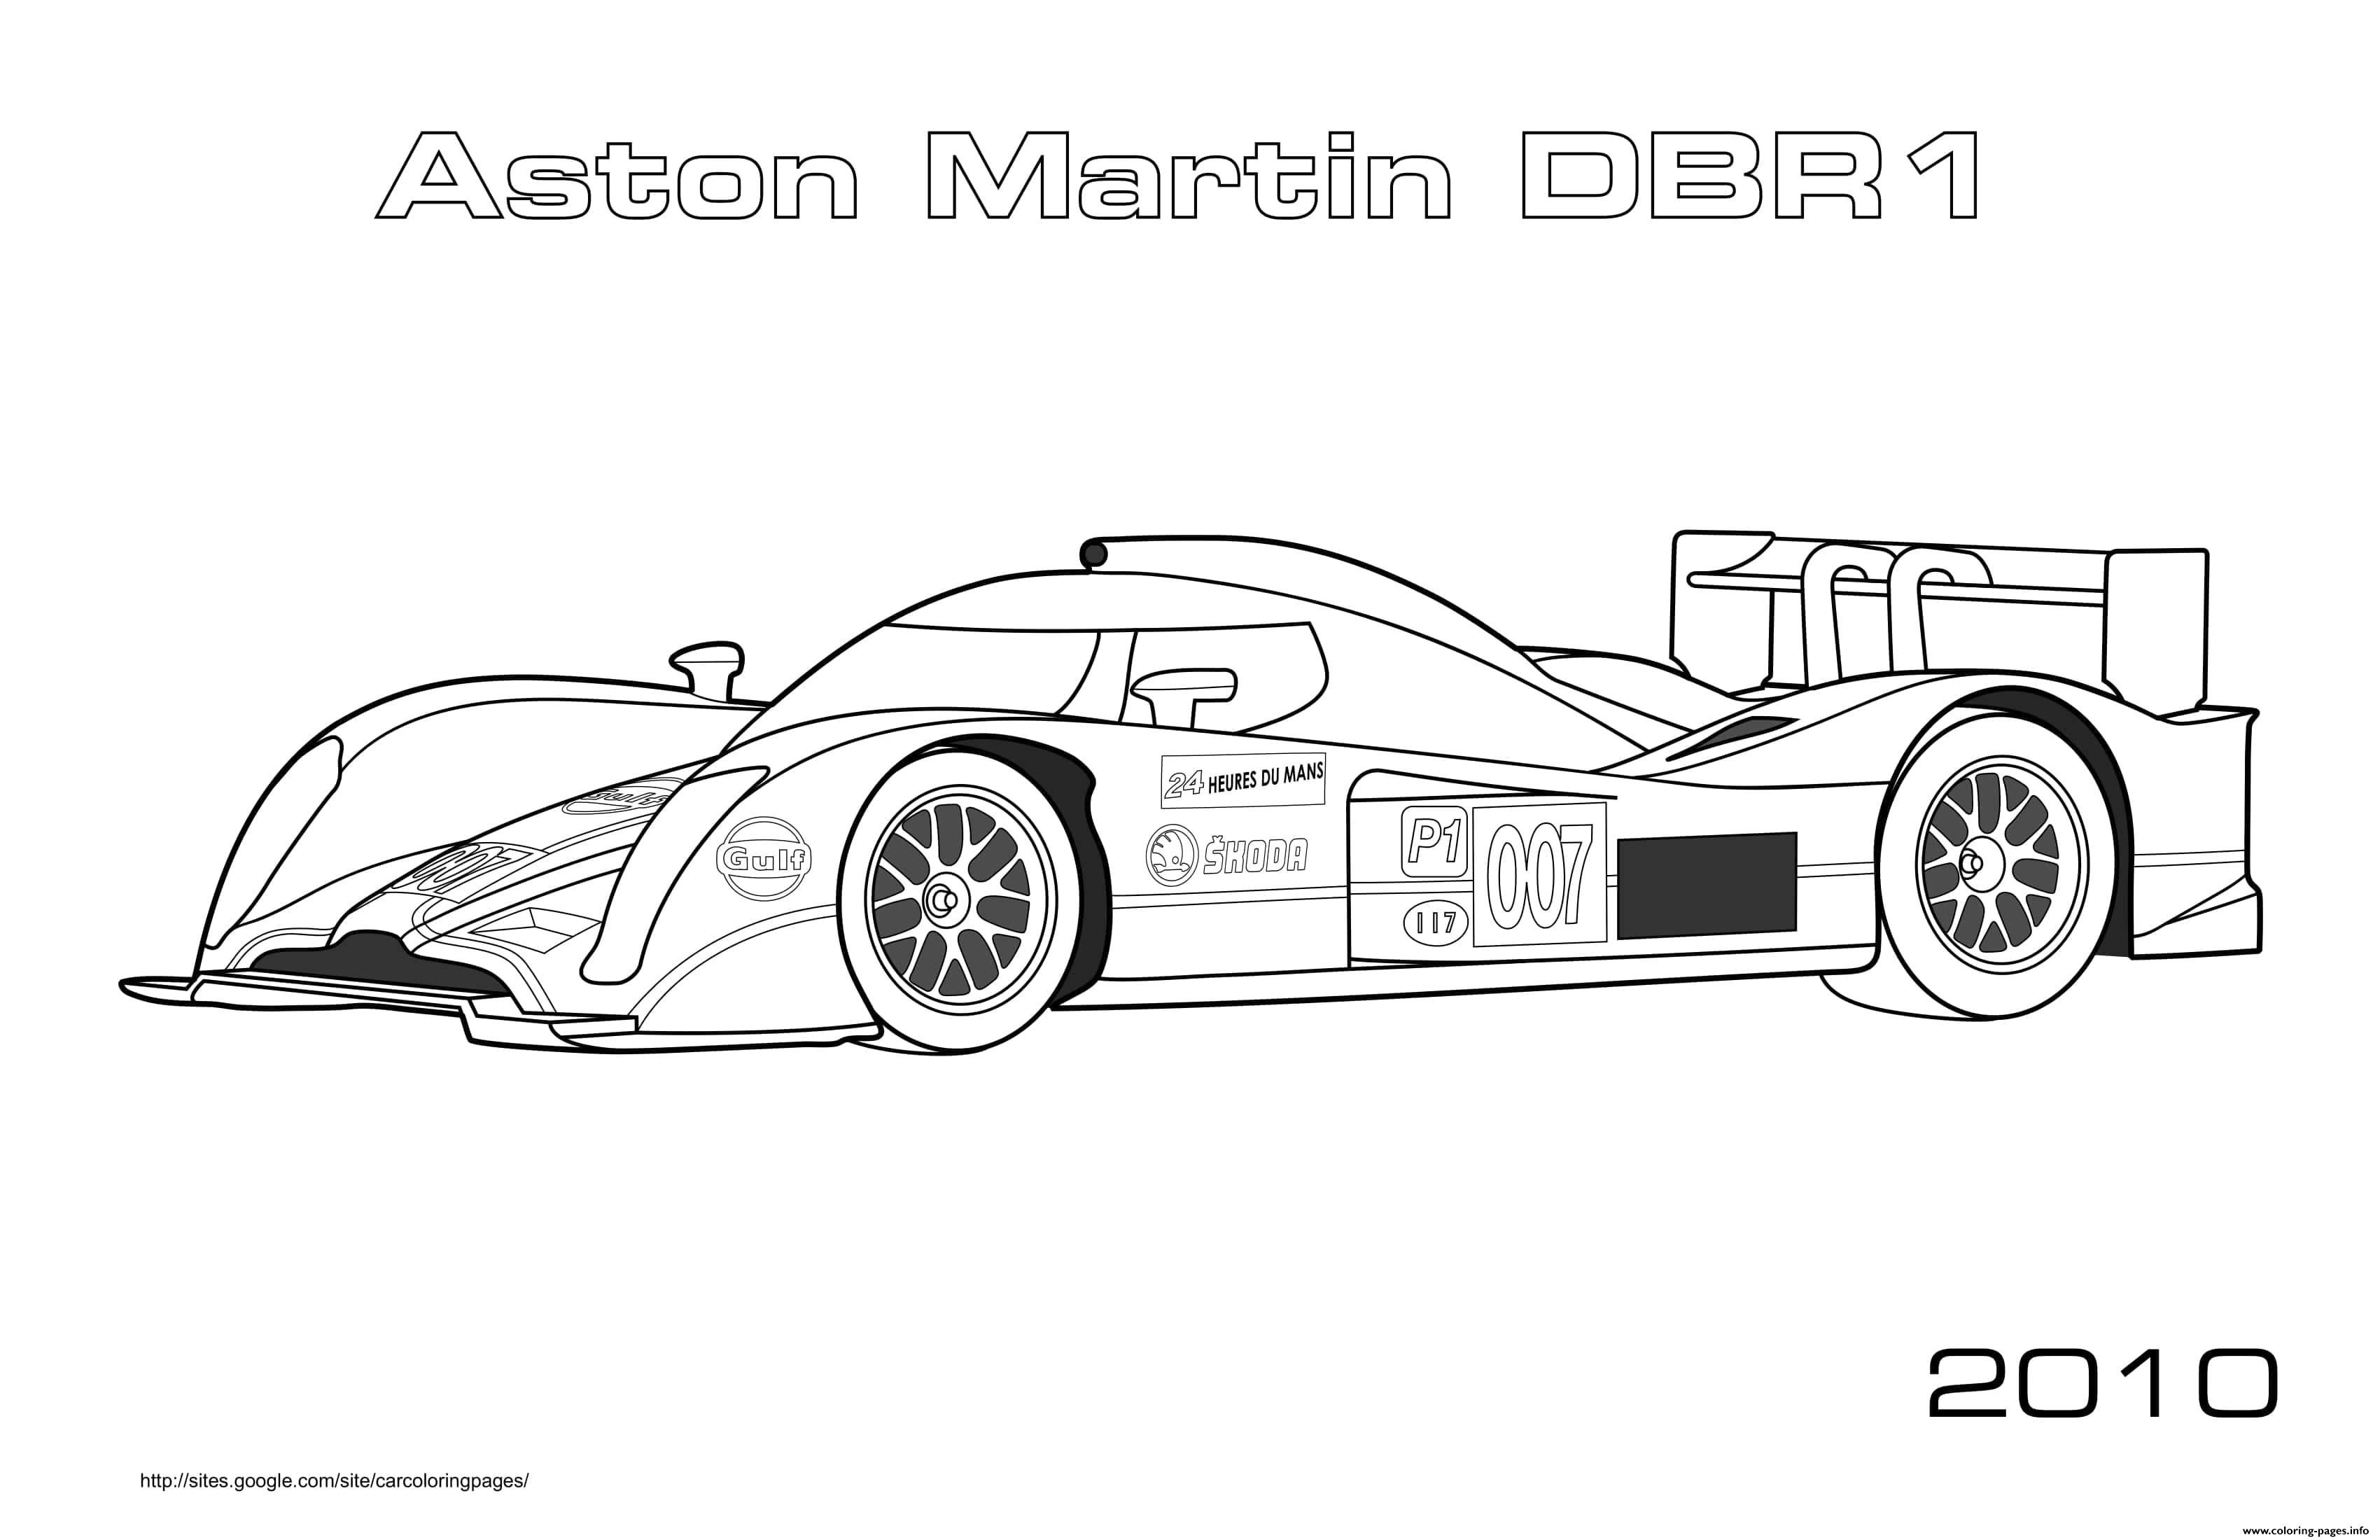 F1 Aston Martin Dbr1 2010 coloring